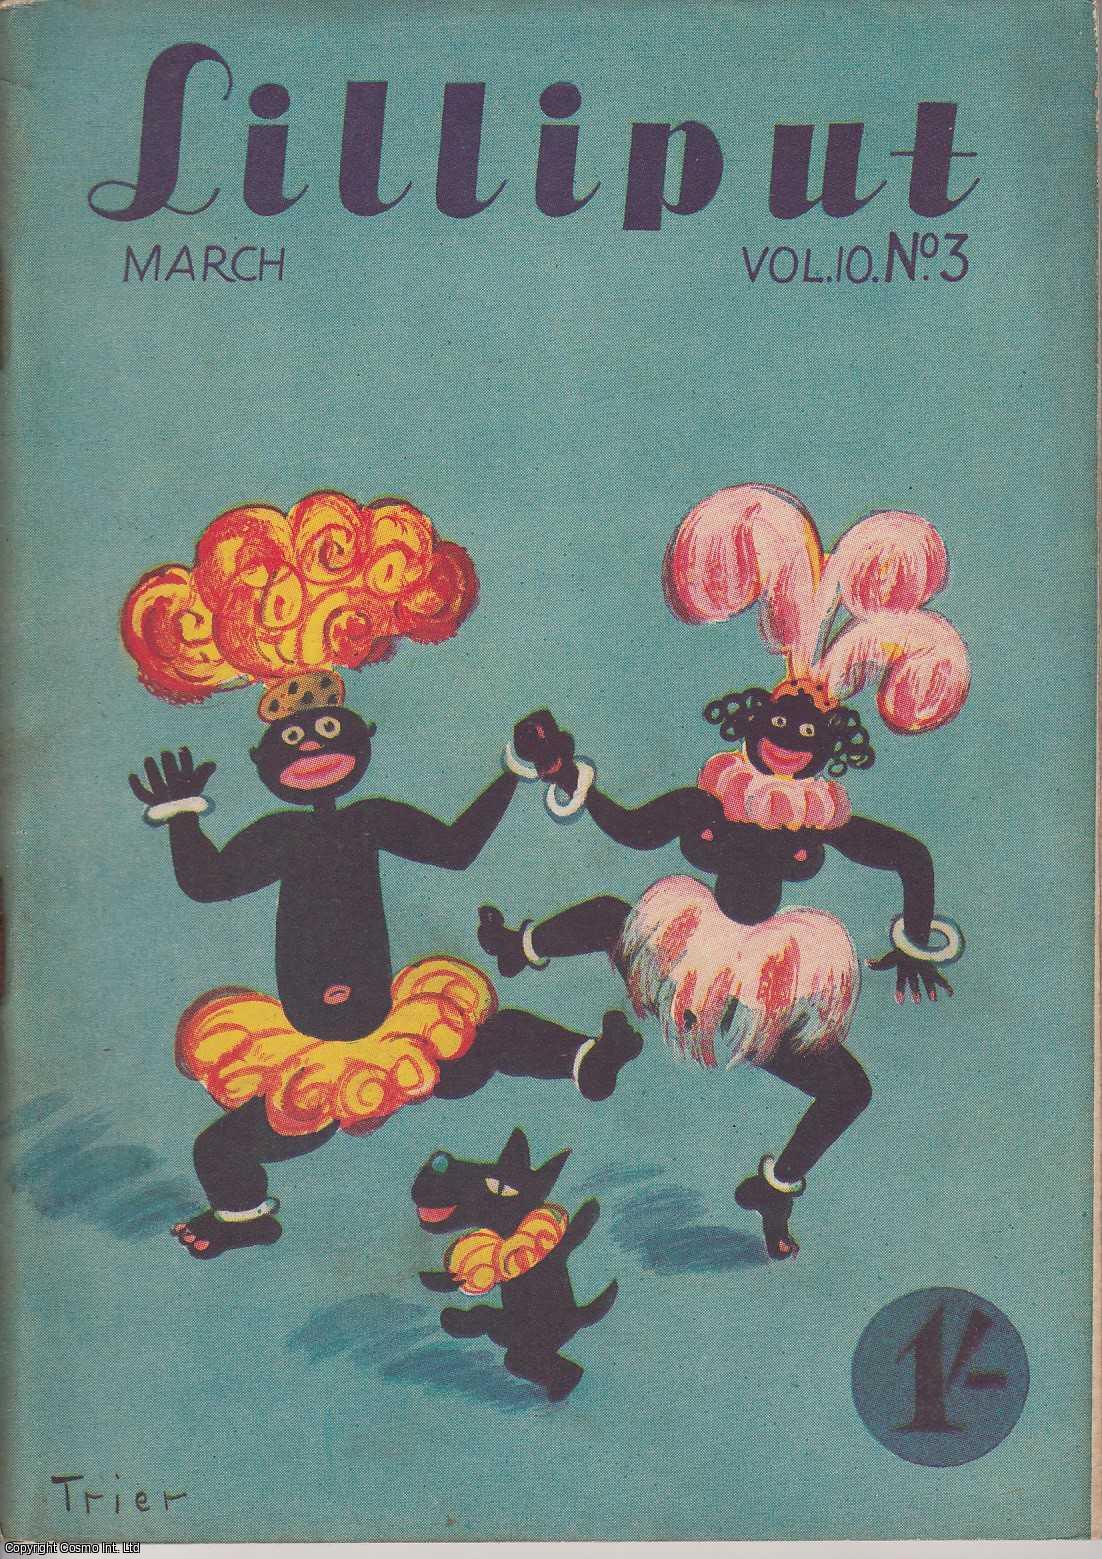 Lilliput - Lilliput Magazine. March 1942. Vol.10 no.3 Issue no.57. E.J. Hobsbawn, Tom Harrisson, Philip Joprdan, and other pieces.